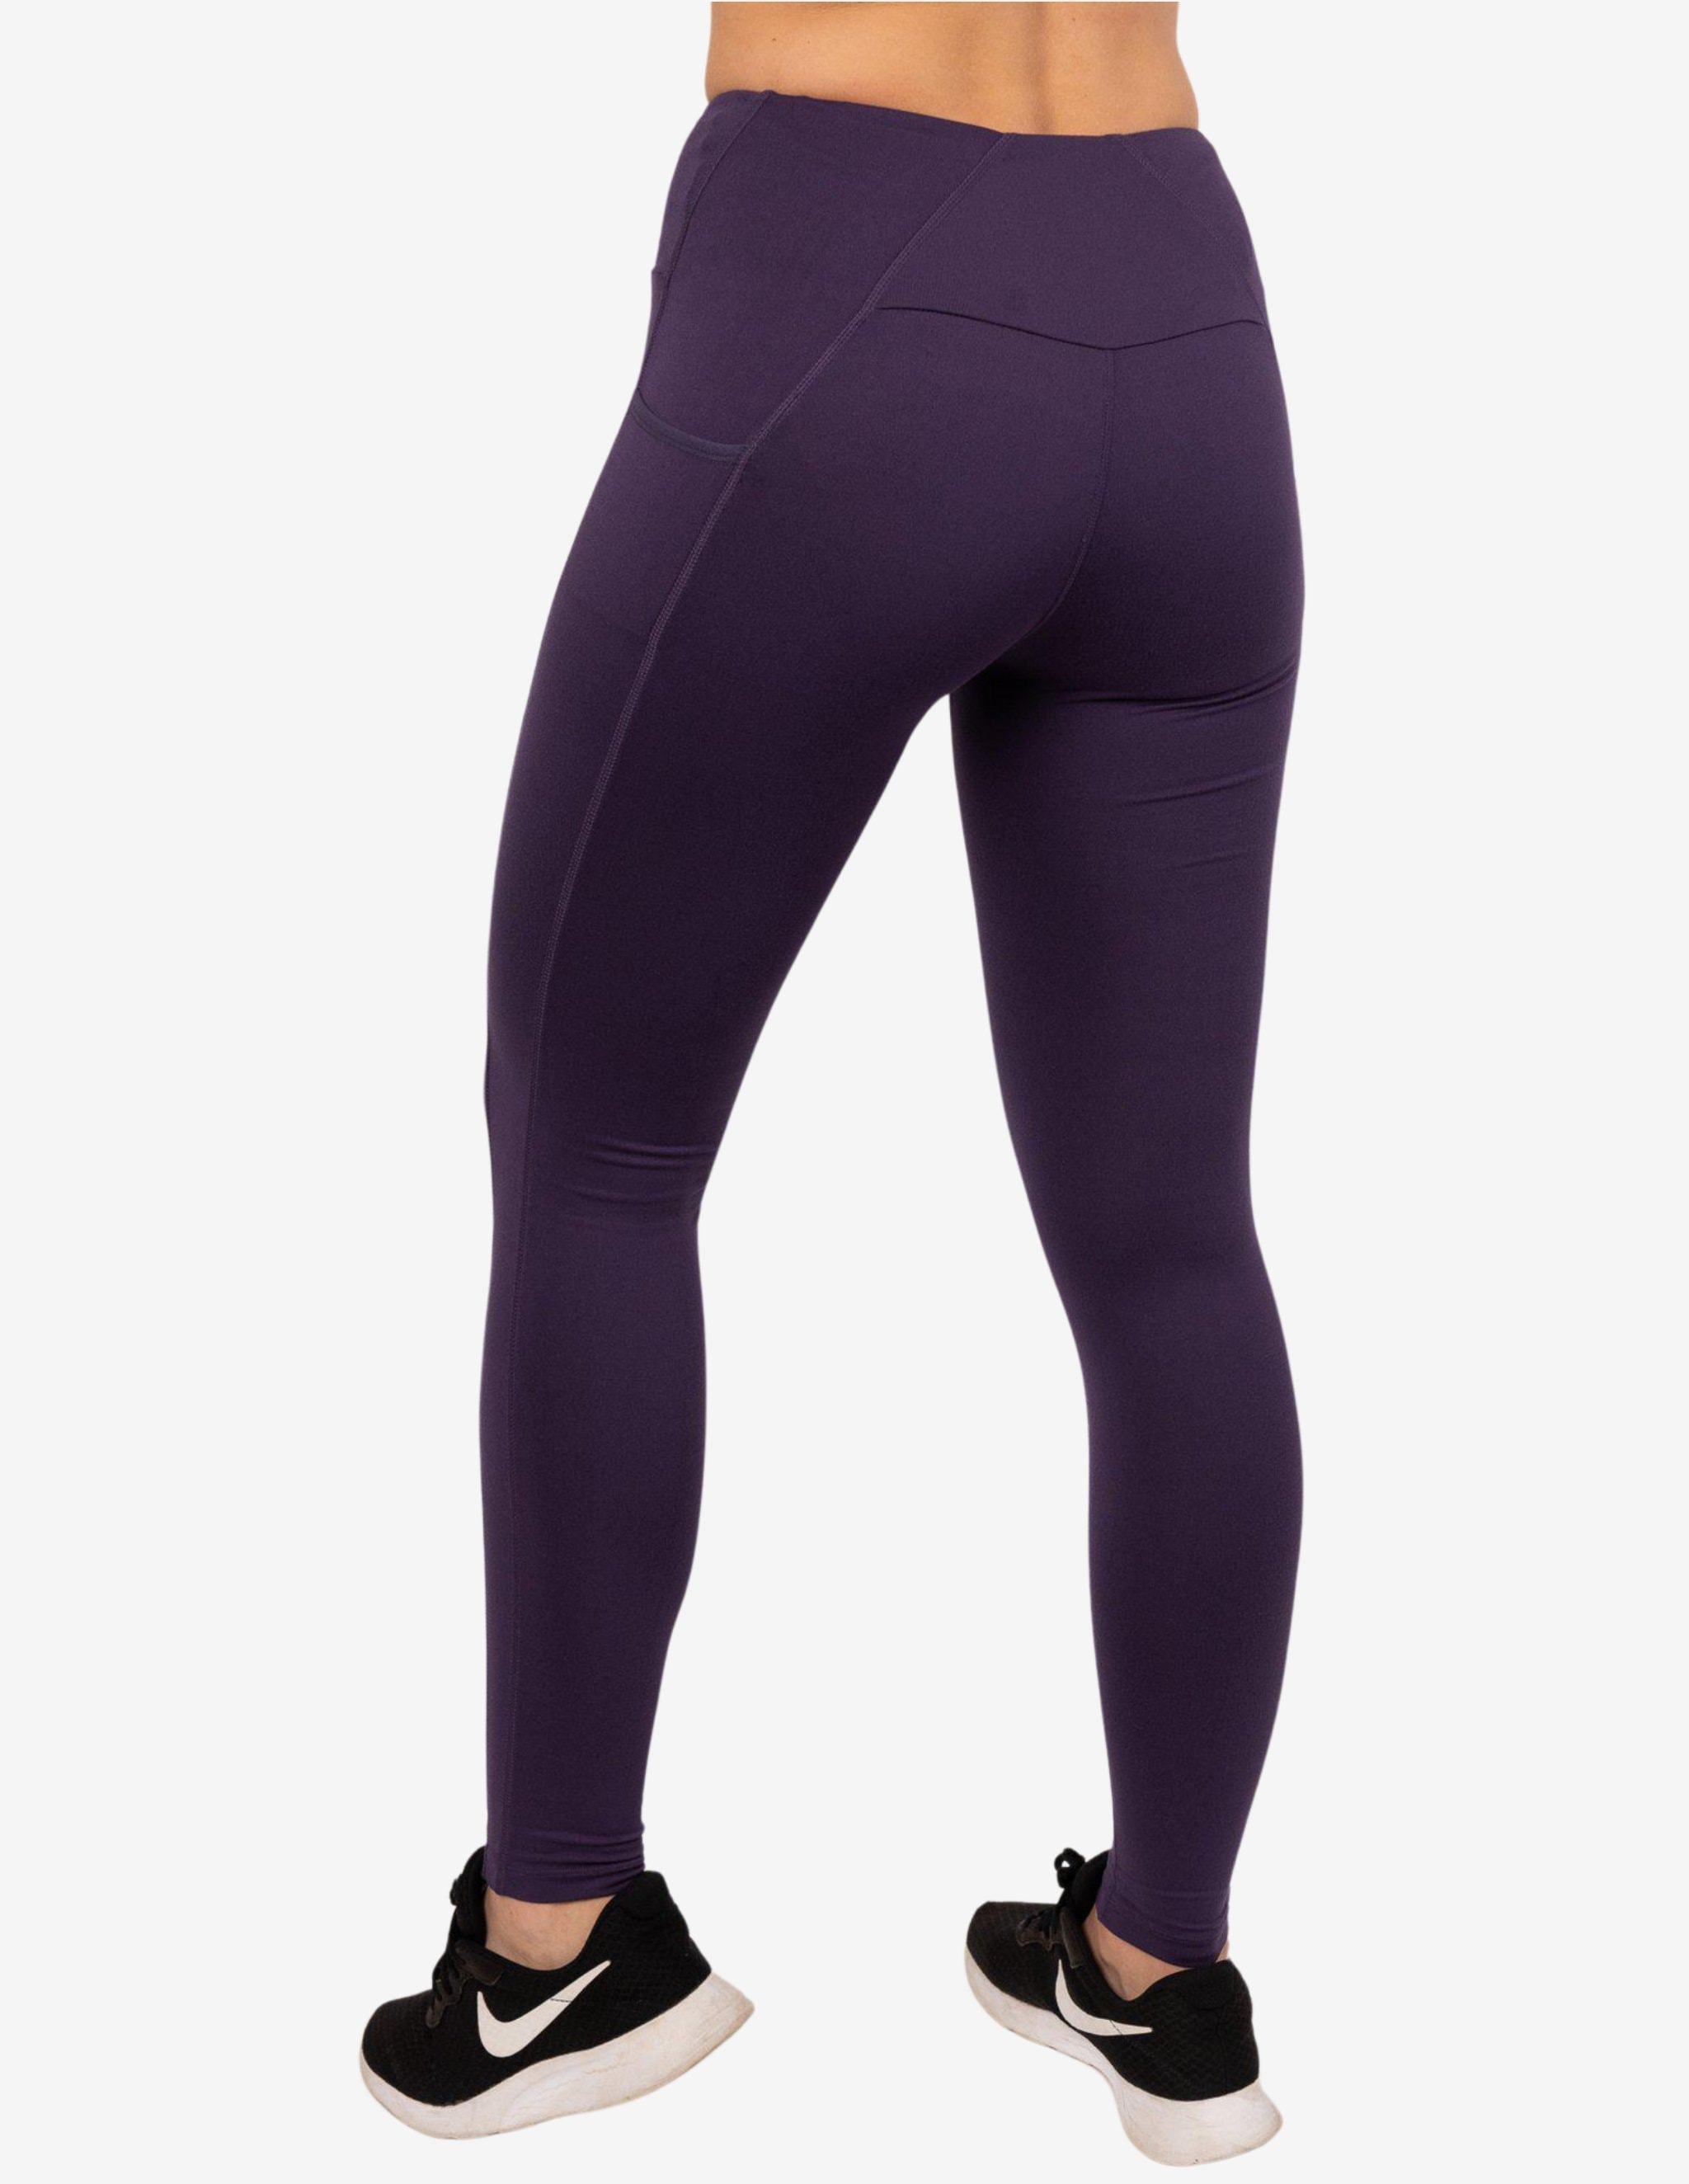 Buy Gymshark Flex Low Rise Leggings - Charcoal / Purple Online